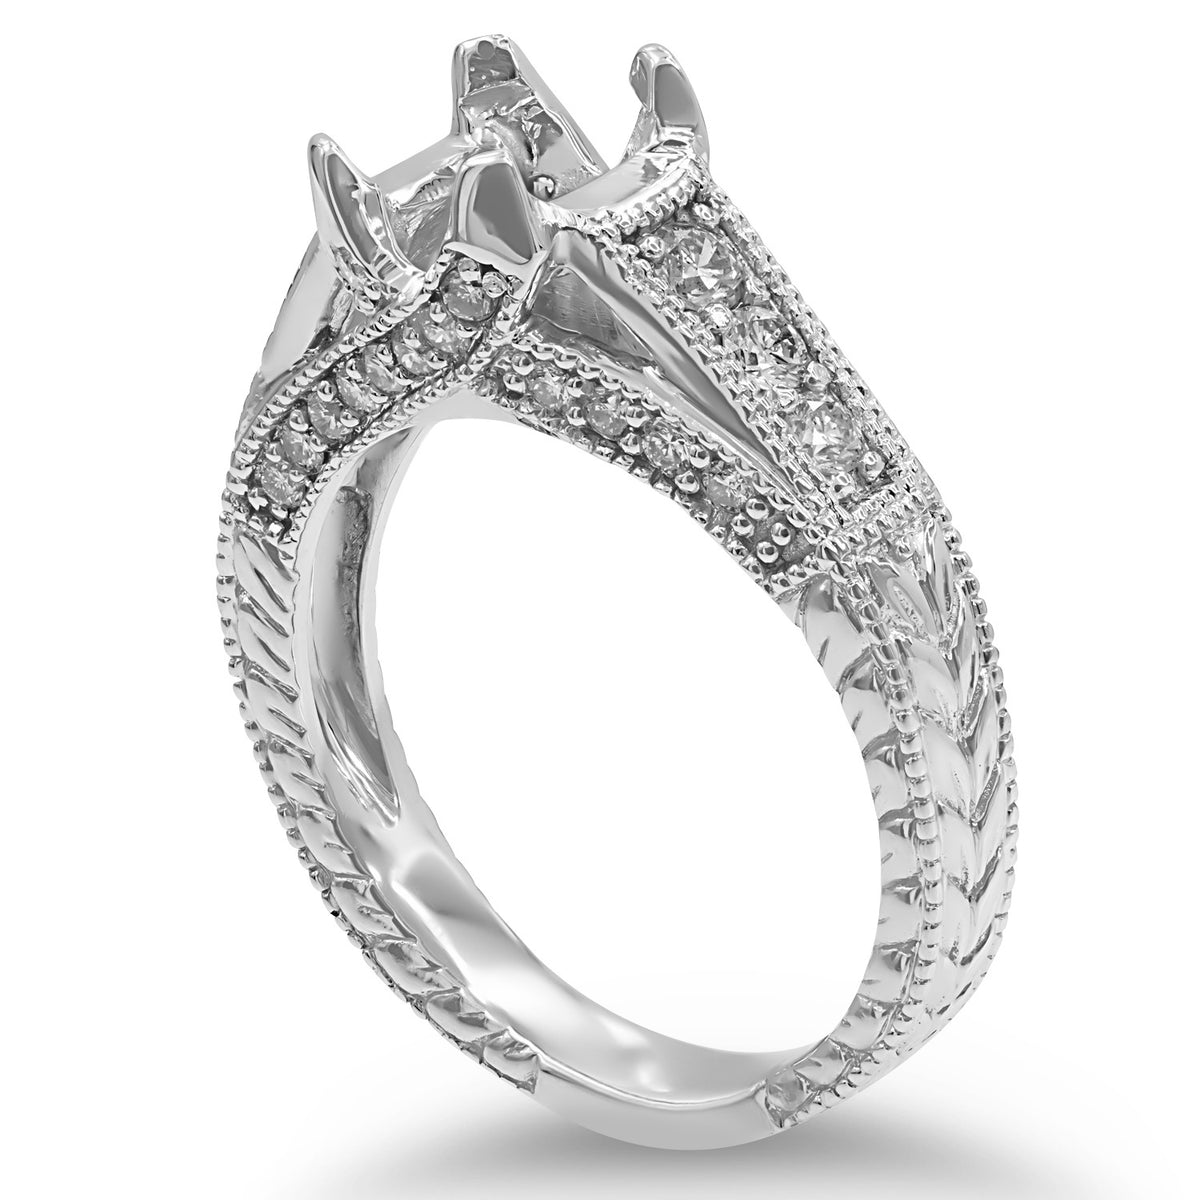 Engraved Semi-Mount Engagement Ring